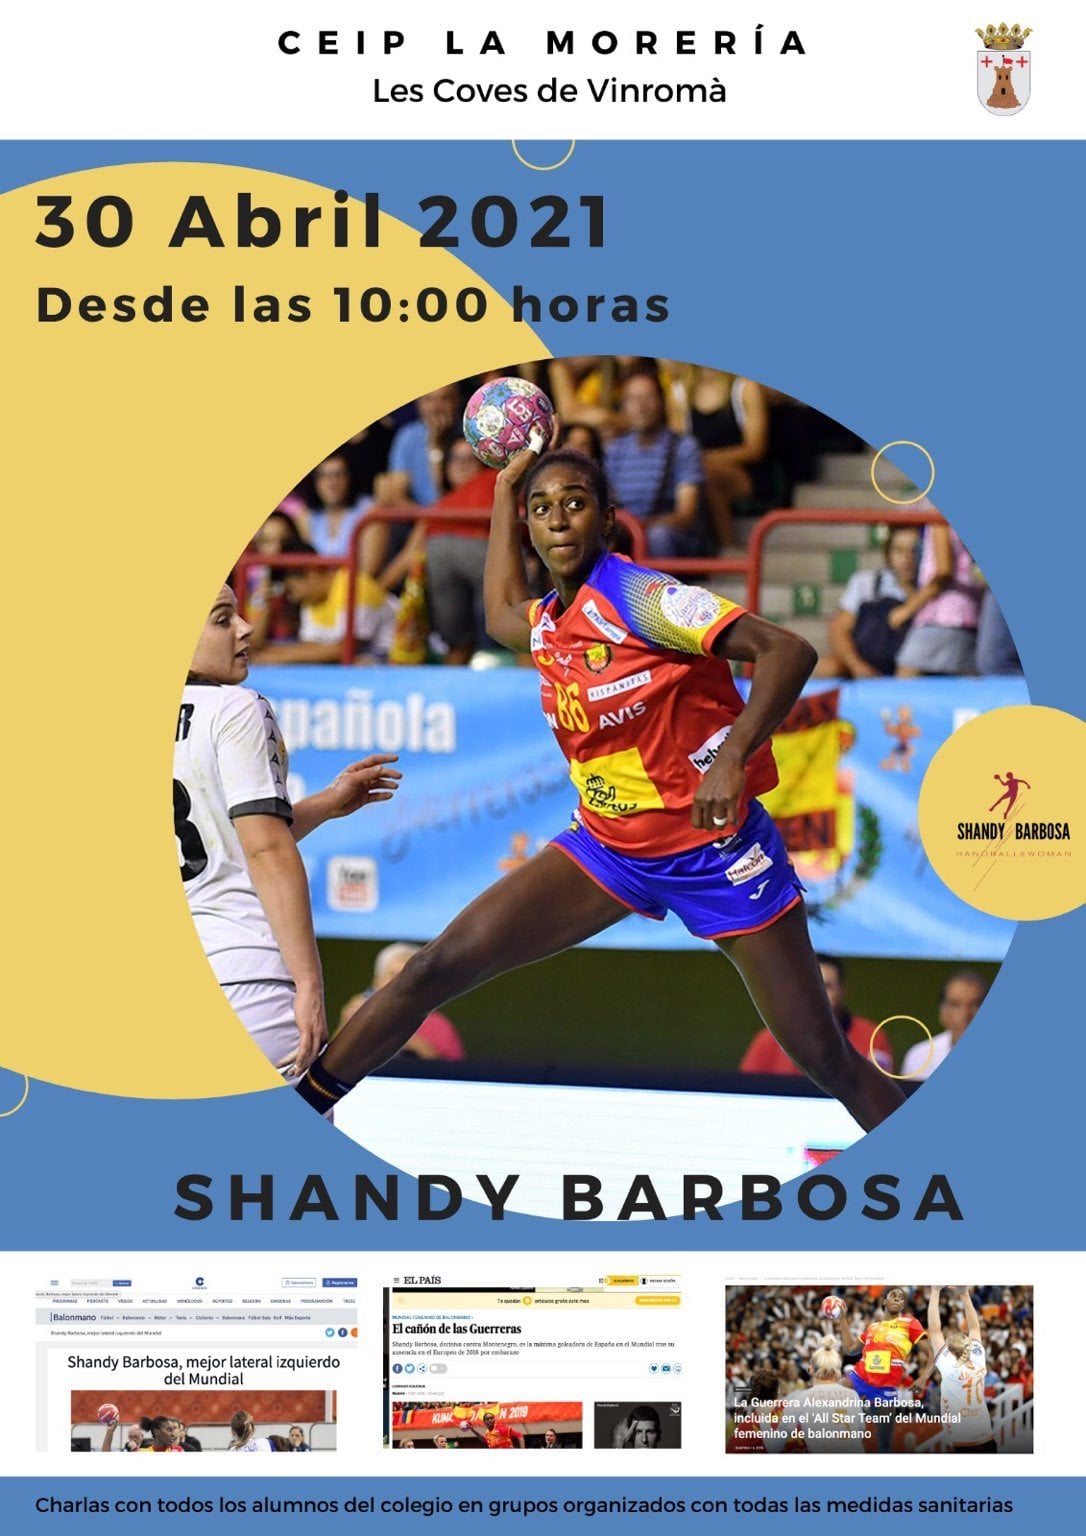 Shandy Barbosa